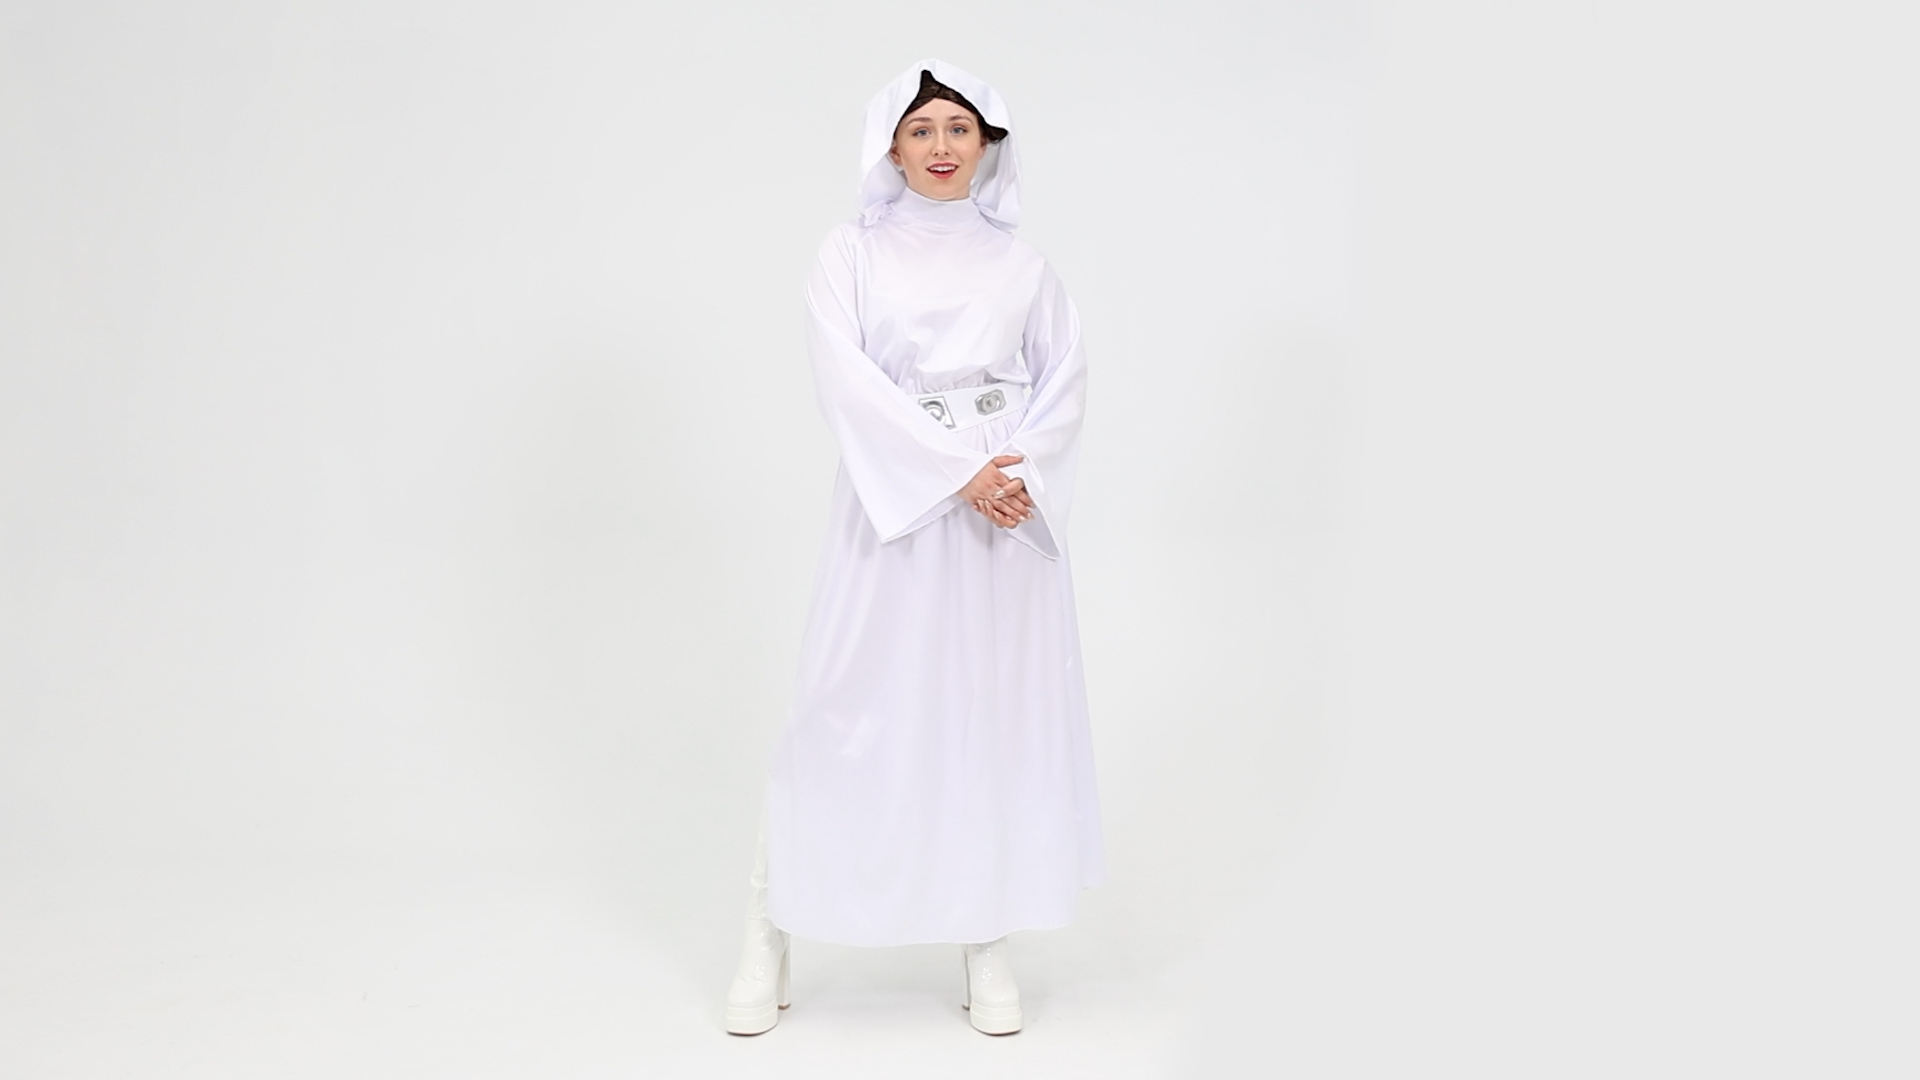 JWC1020 Princess Leia Adult Hooded Costume